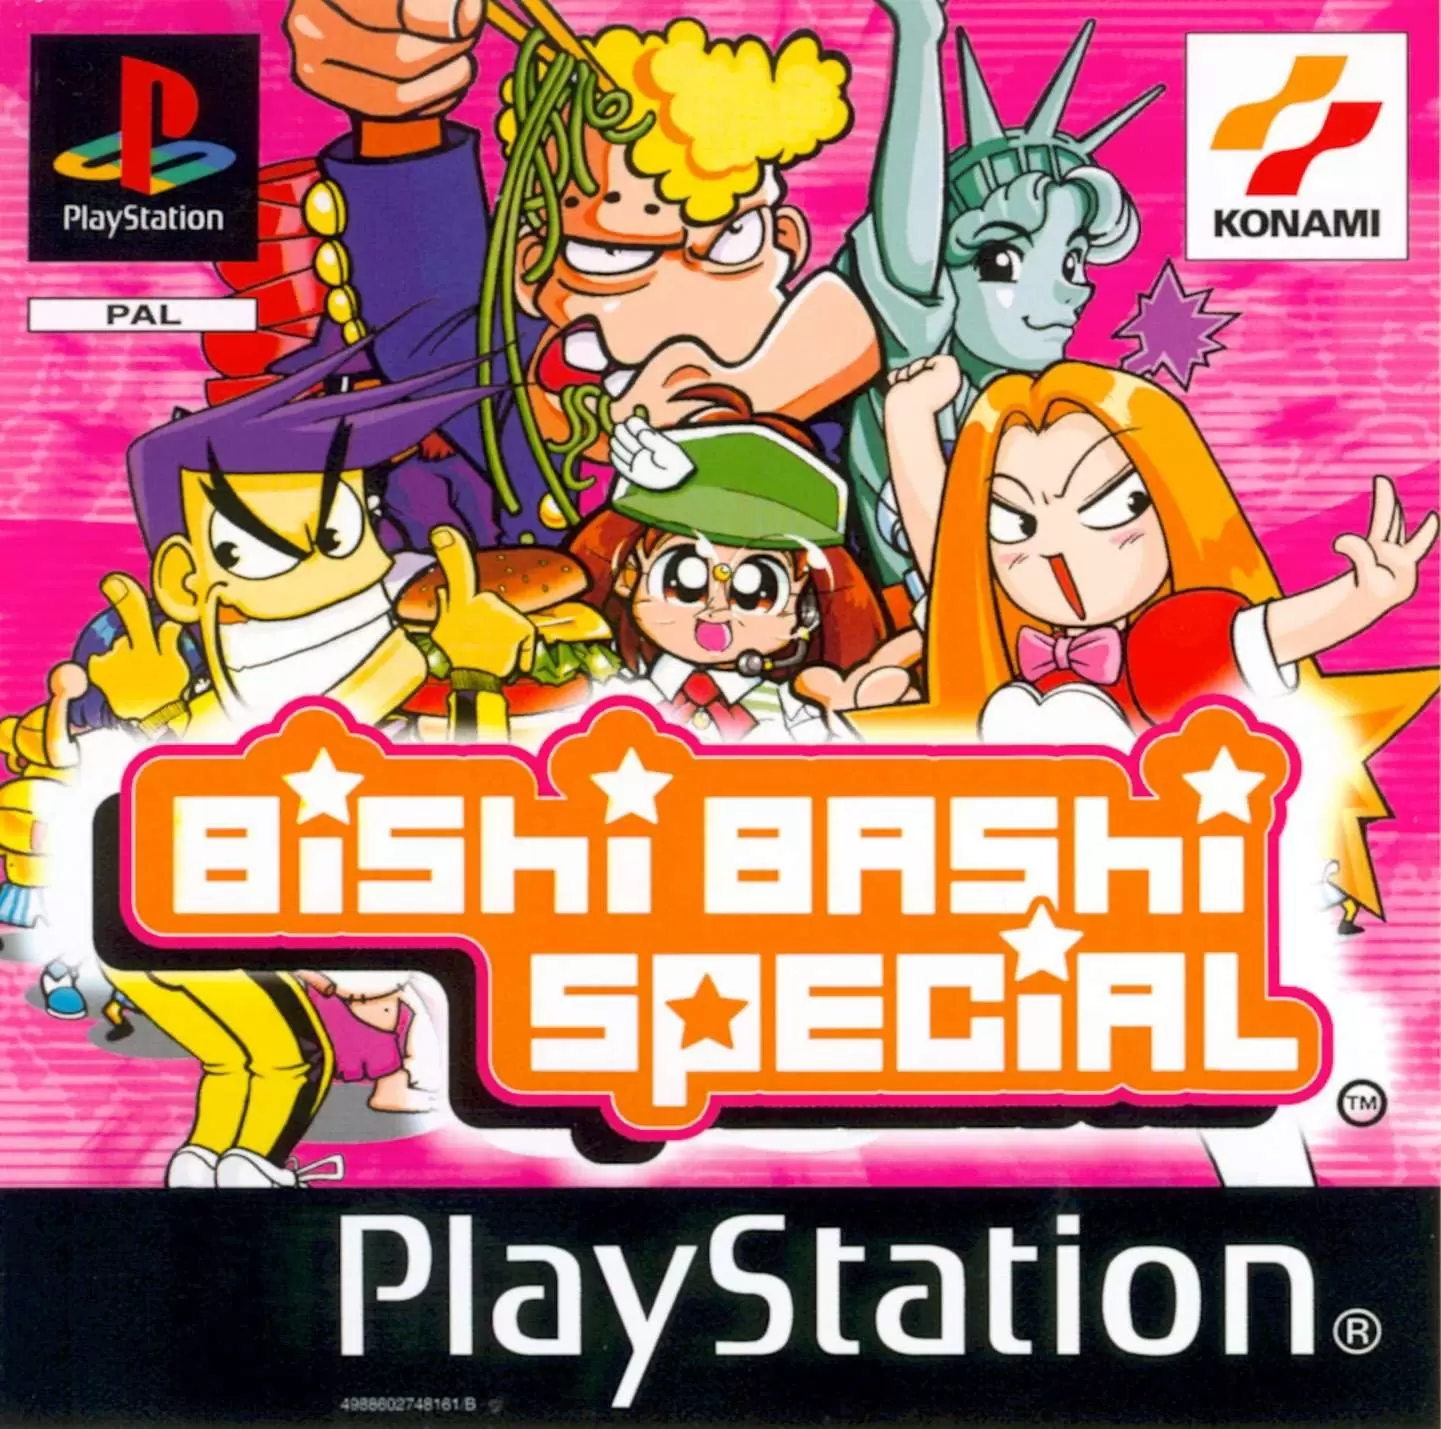 Jeux Playstation PS1 - Bishi Bashi Special